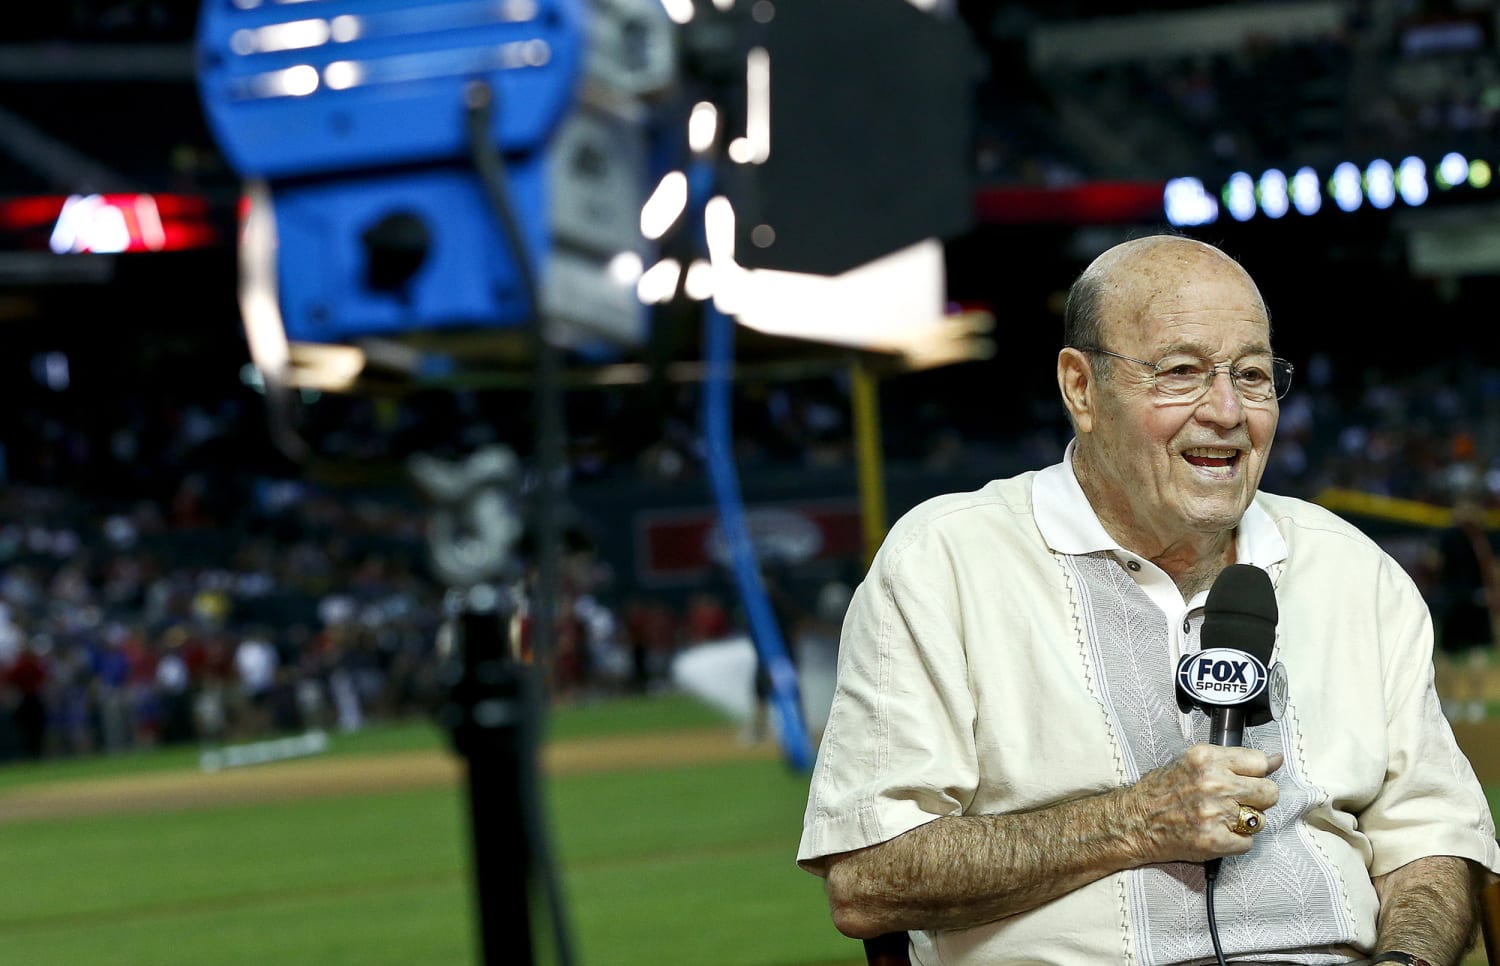 Joe Garagiola Dead: Baseball Player Turned Broadcaster Dies at 90